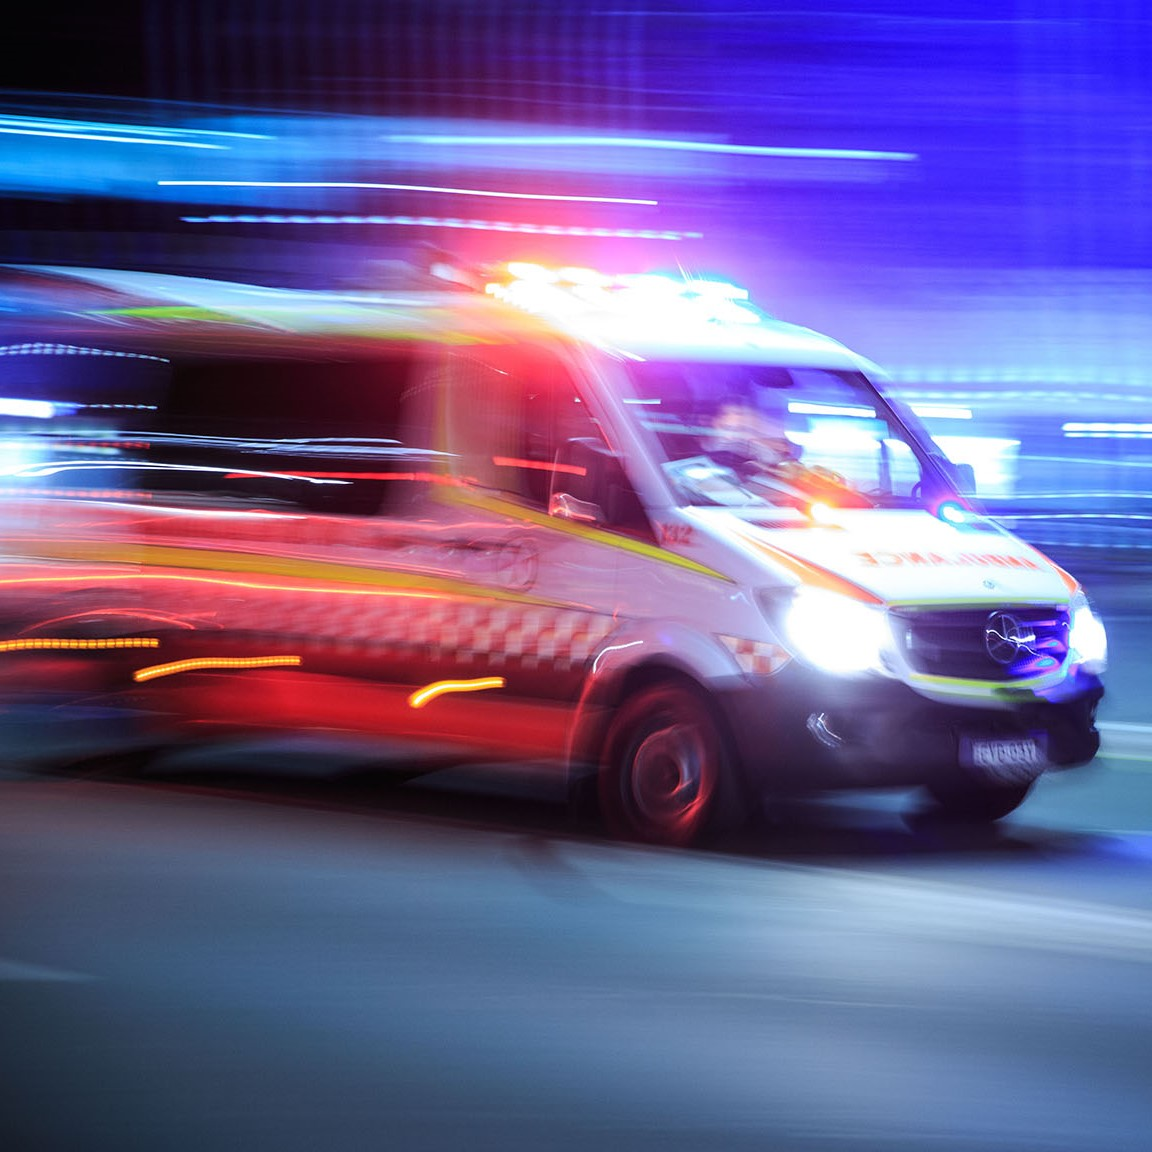 Embezzlement allegations at Ambulance Victoria